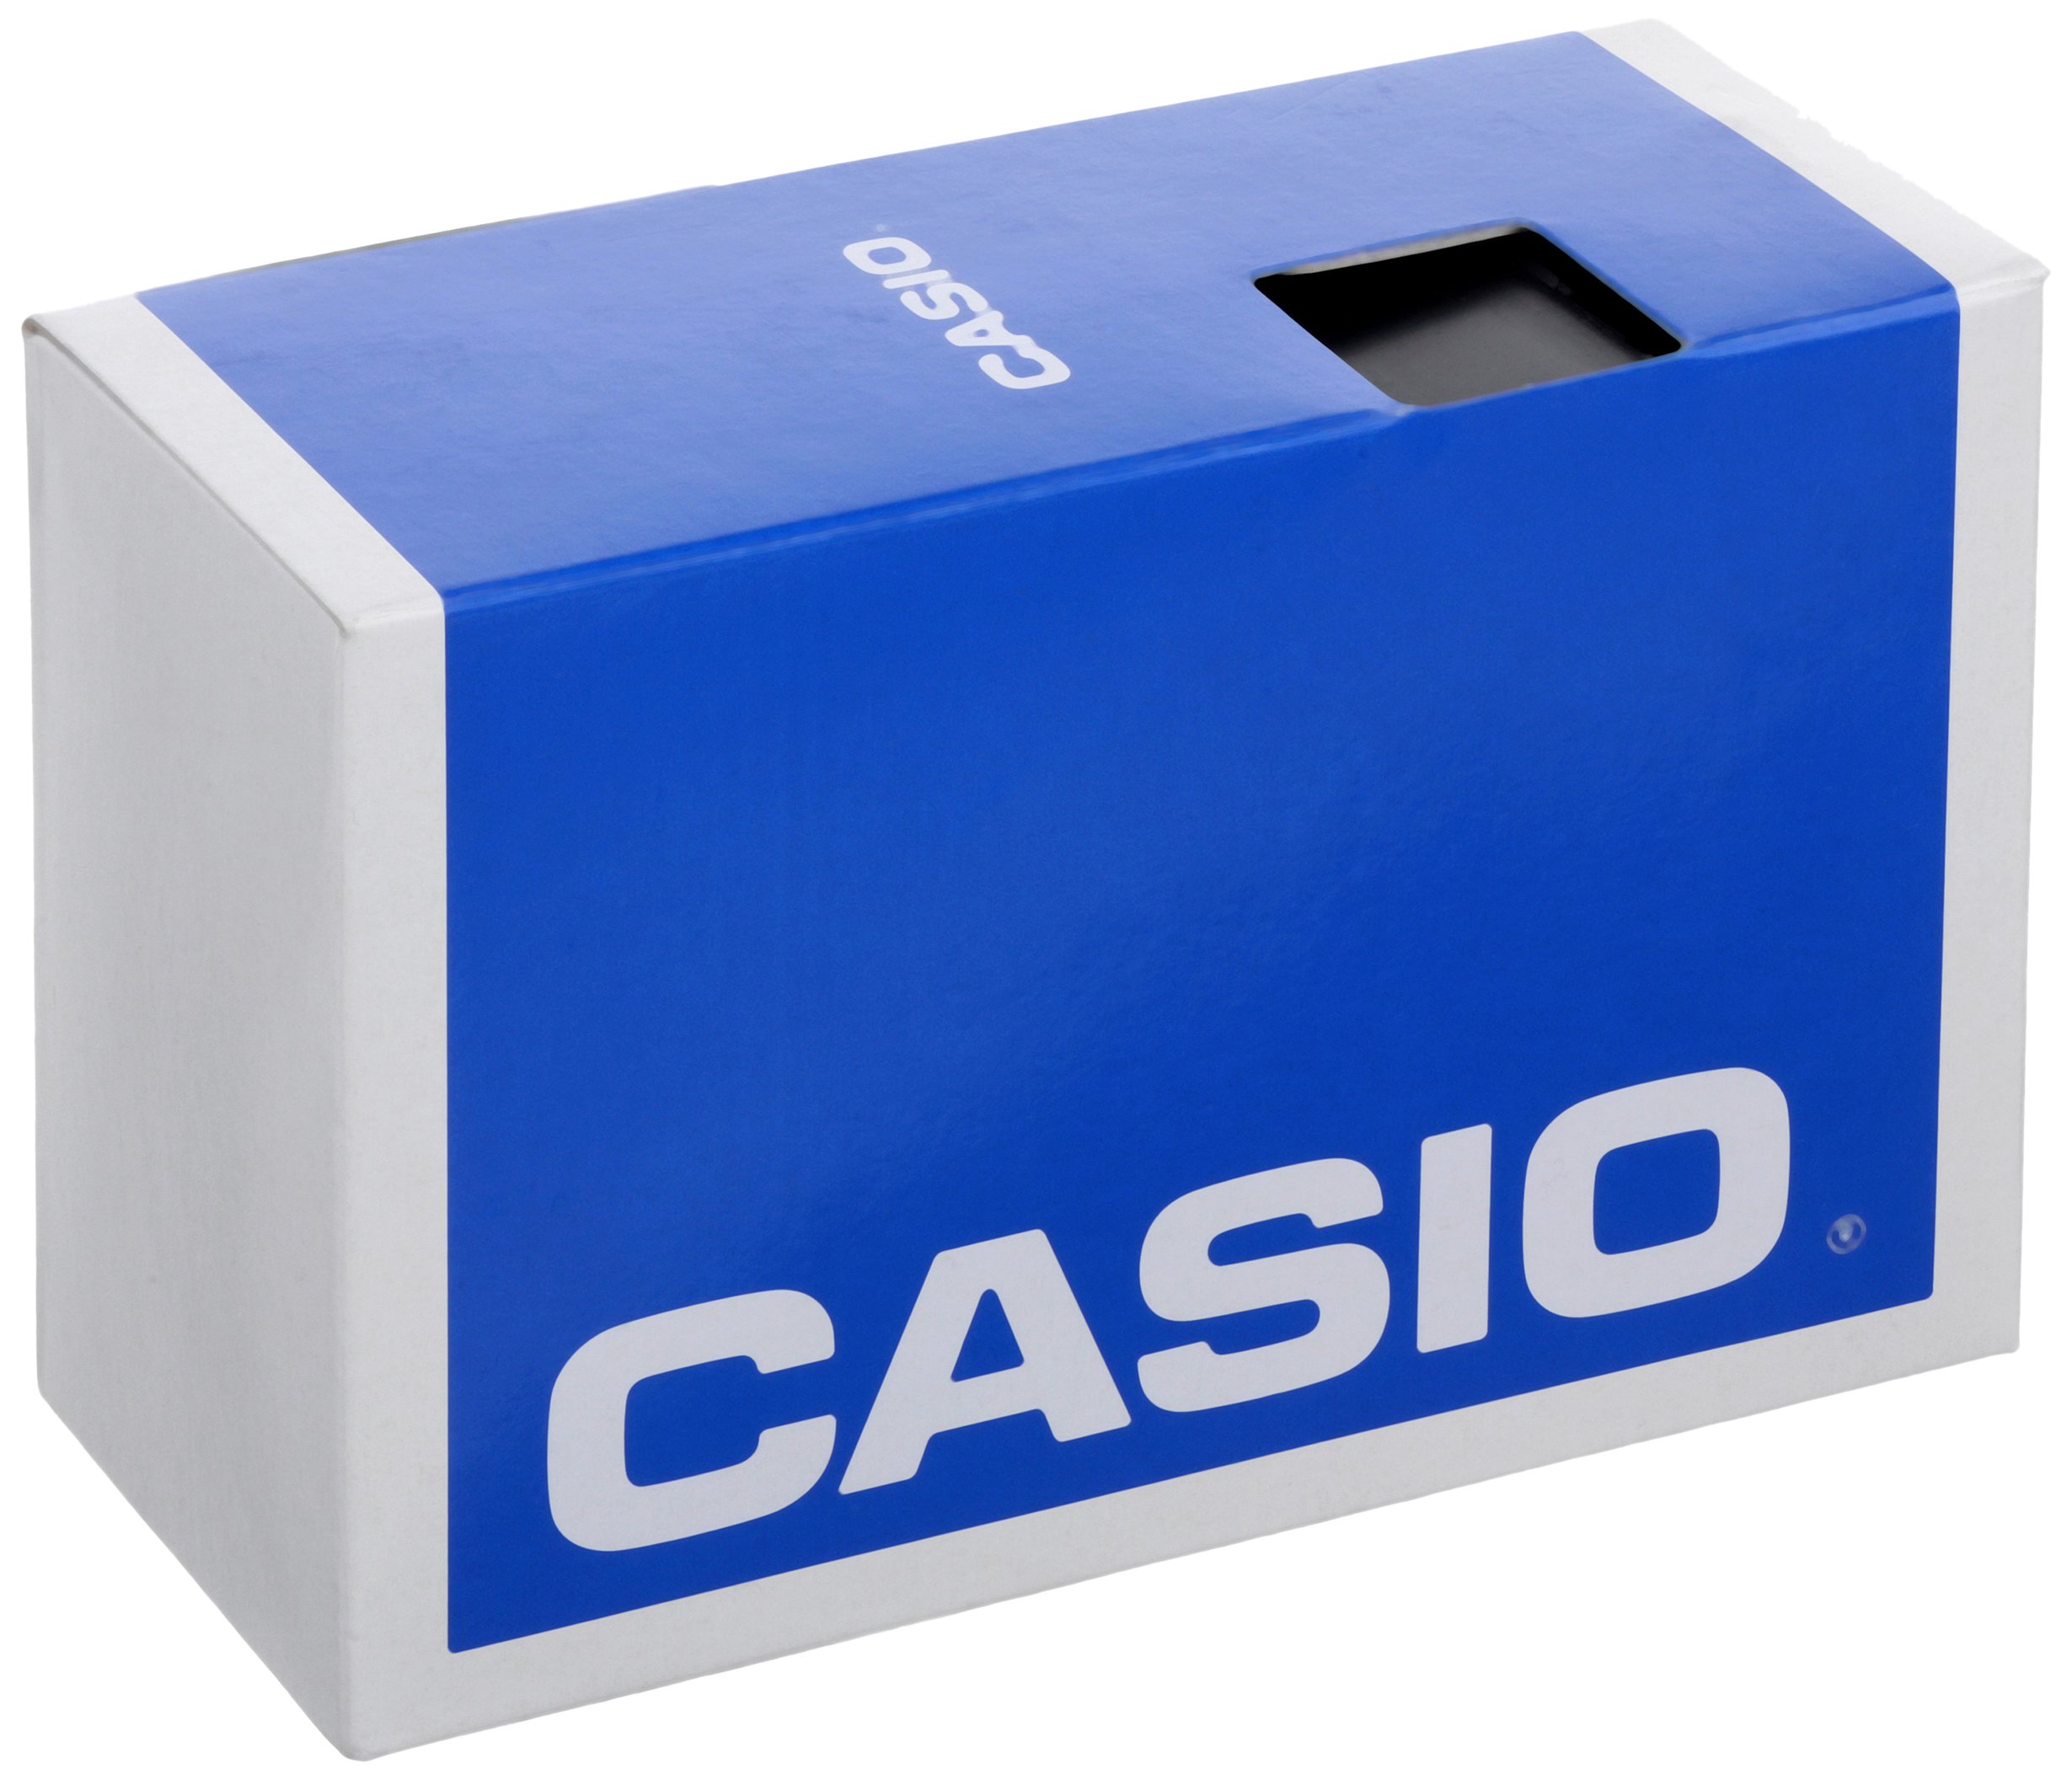 Casio Women's LRW-200H-9EVCF Classic Analog-Digital Display Quartz Blue Watch